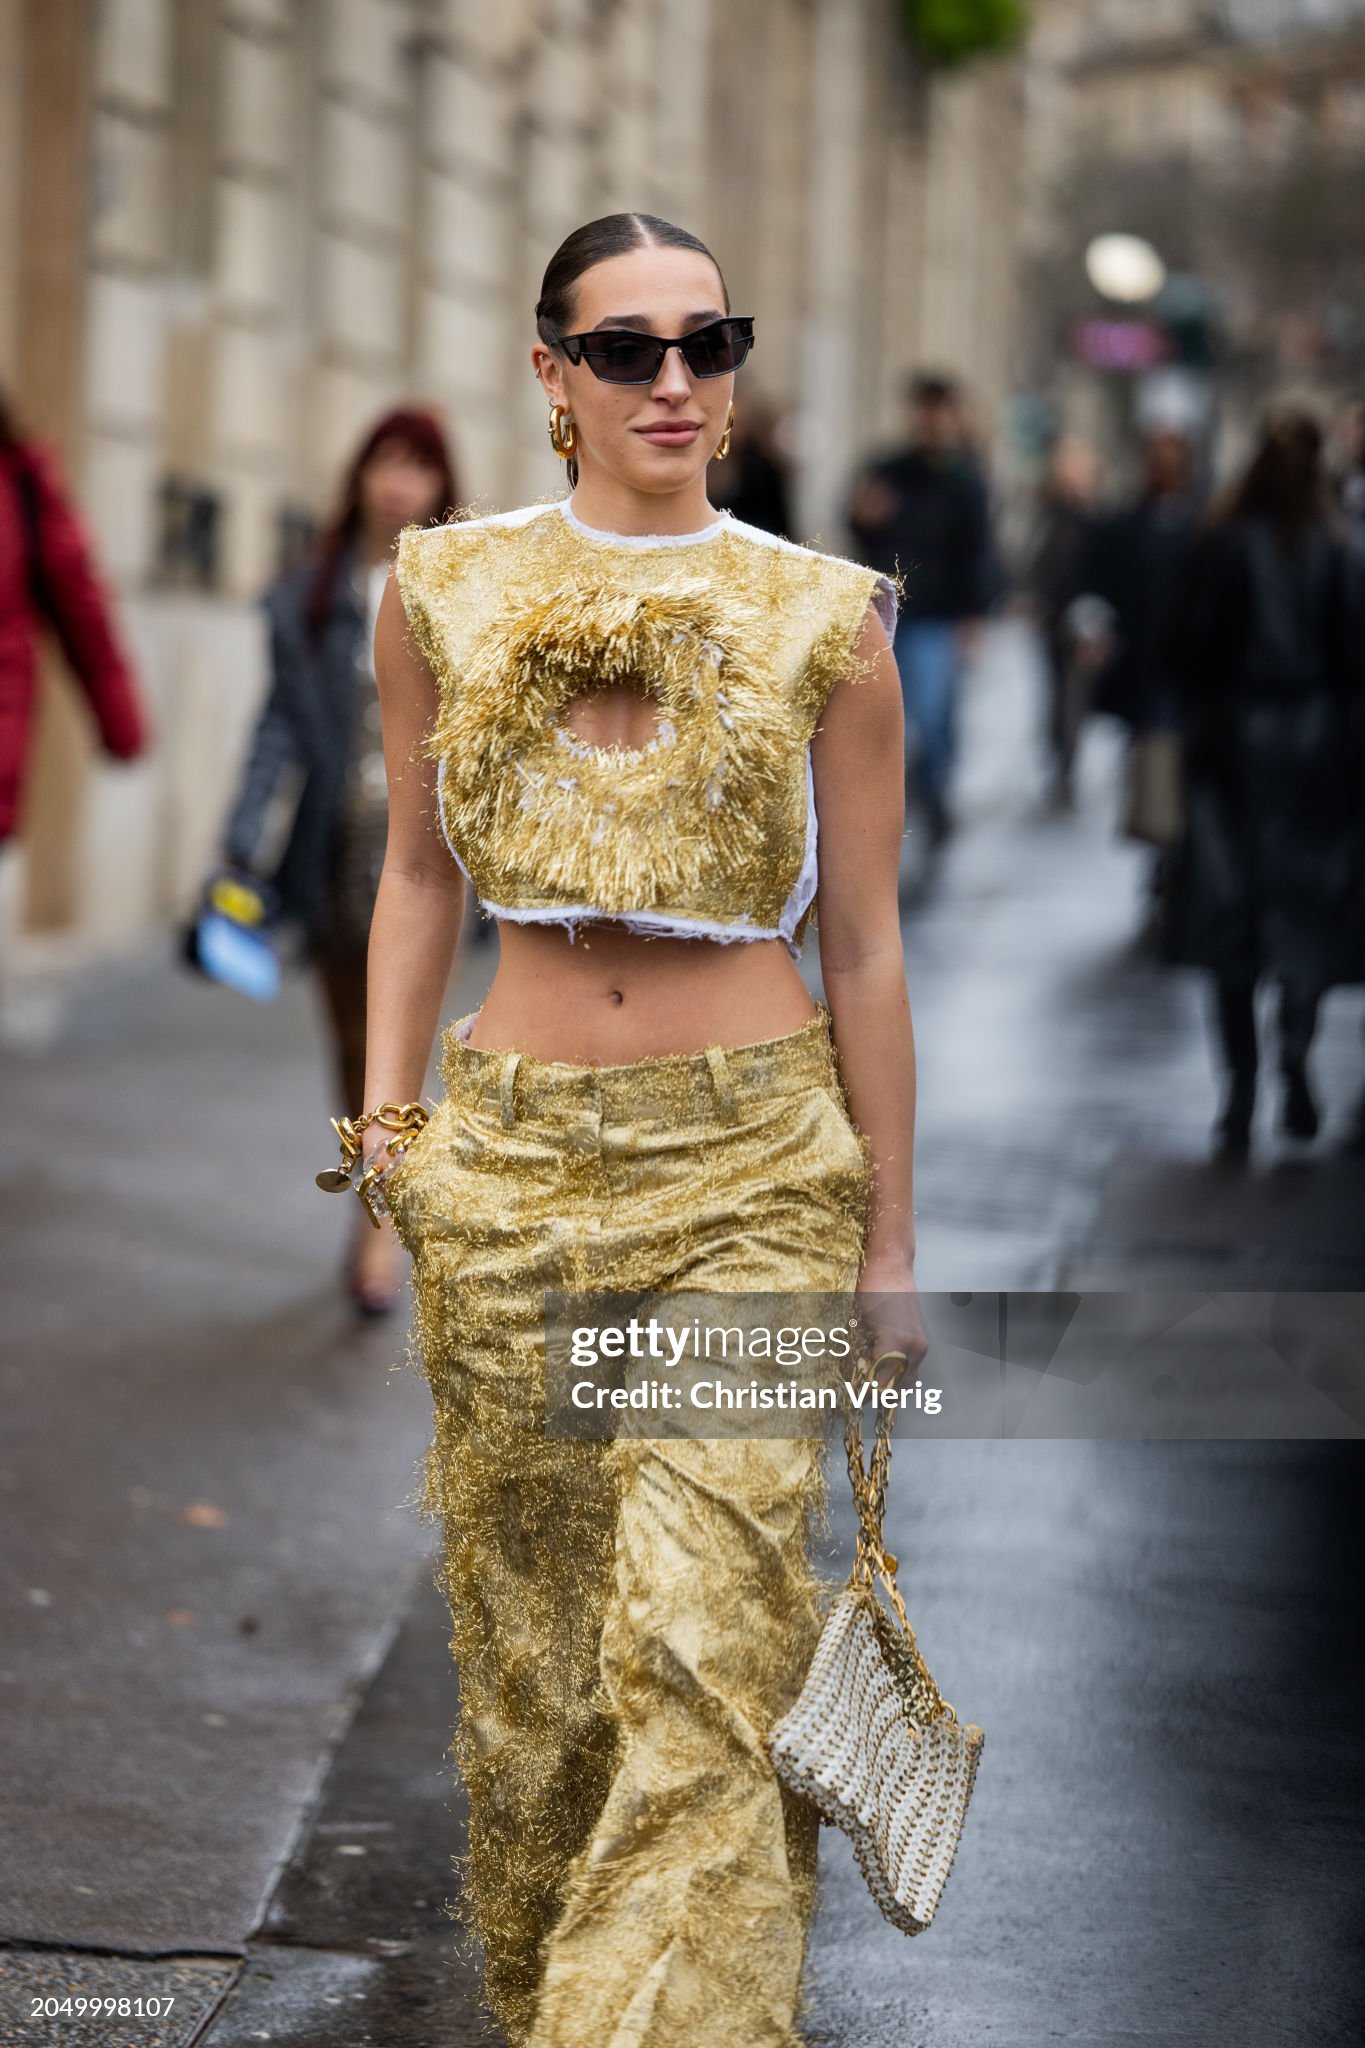 paris-france-ginevra-mavilla-wears-golden-cut-out-cropped-top-pants-bag-outside-paco-rabanne.jpg